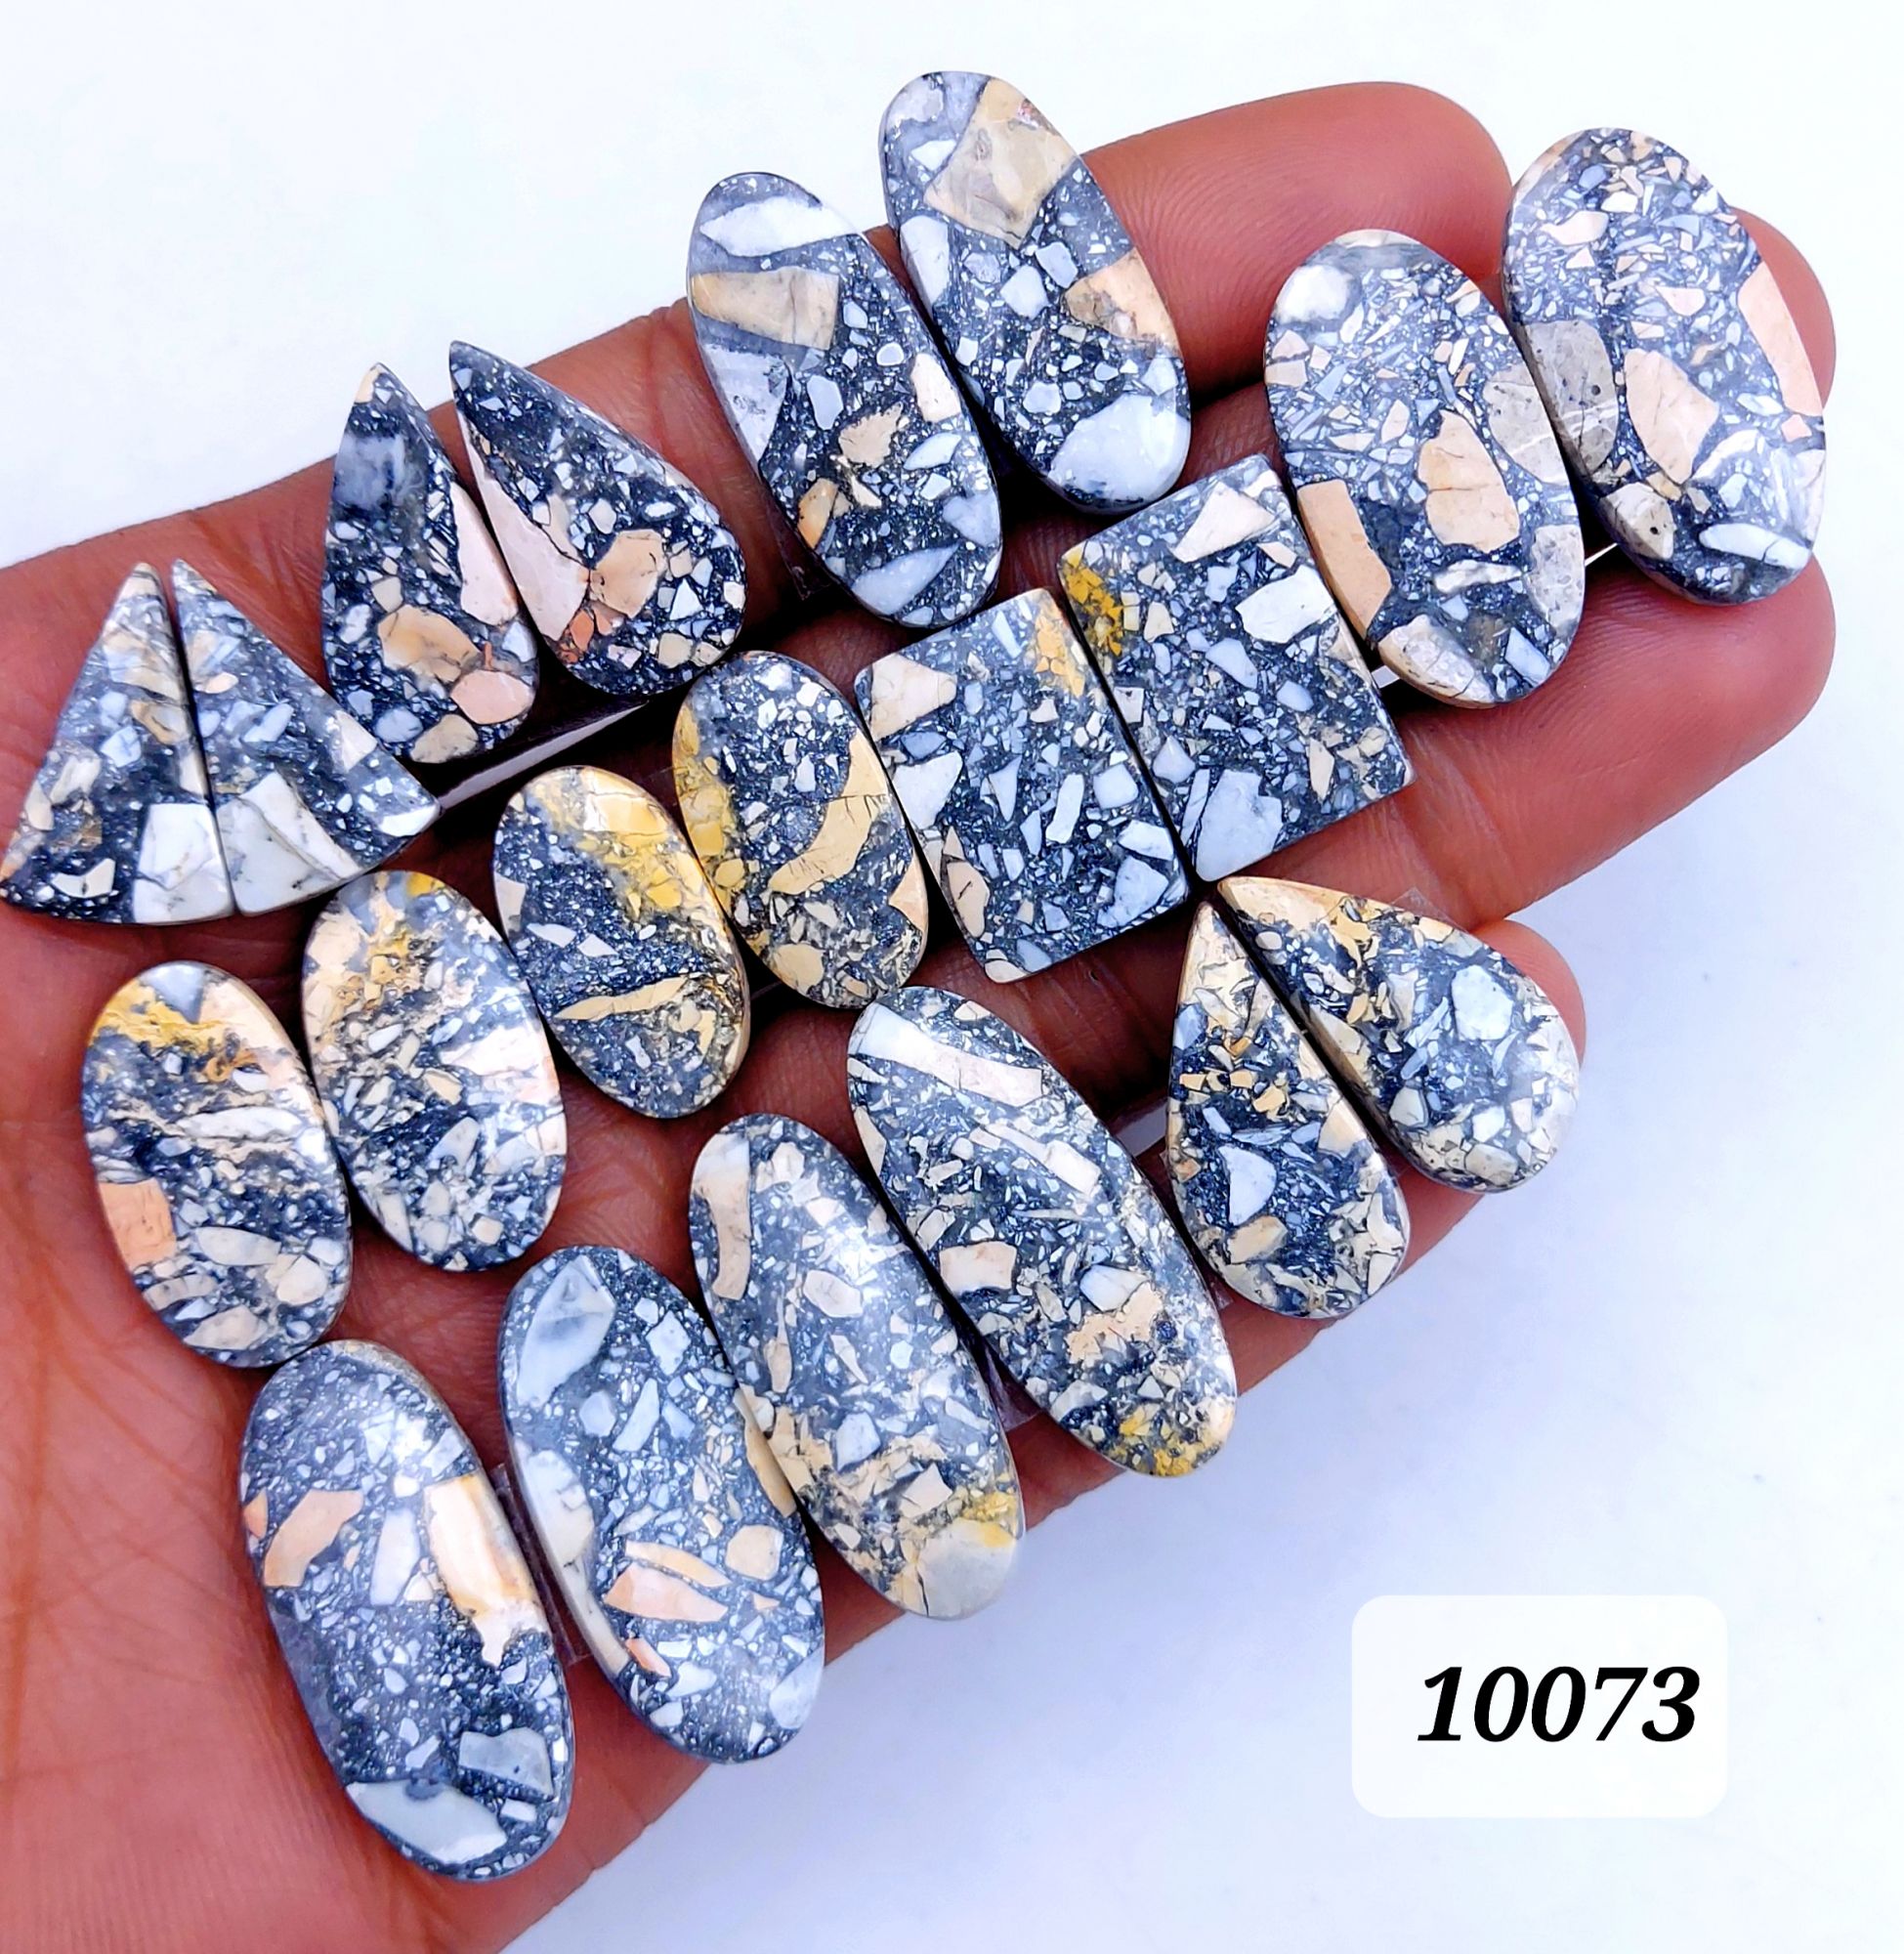 10Pcs 293Cts Natural Maligano Jasper Cabochon Pair Lot Back Side Unpolished Semi-Precious Gemstones For Jewelry Making 32x13 22x12mm #10073